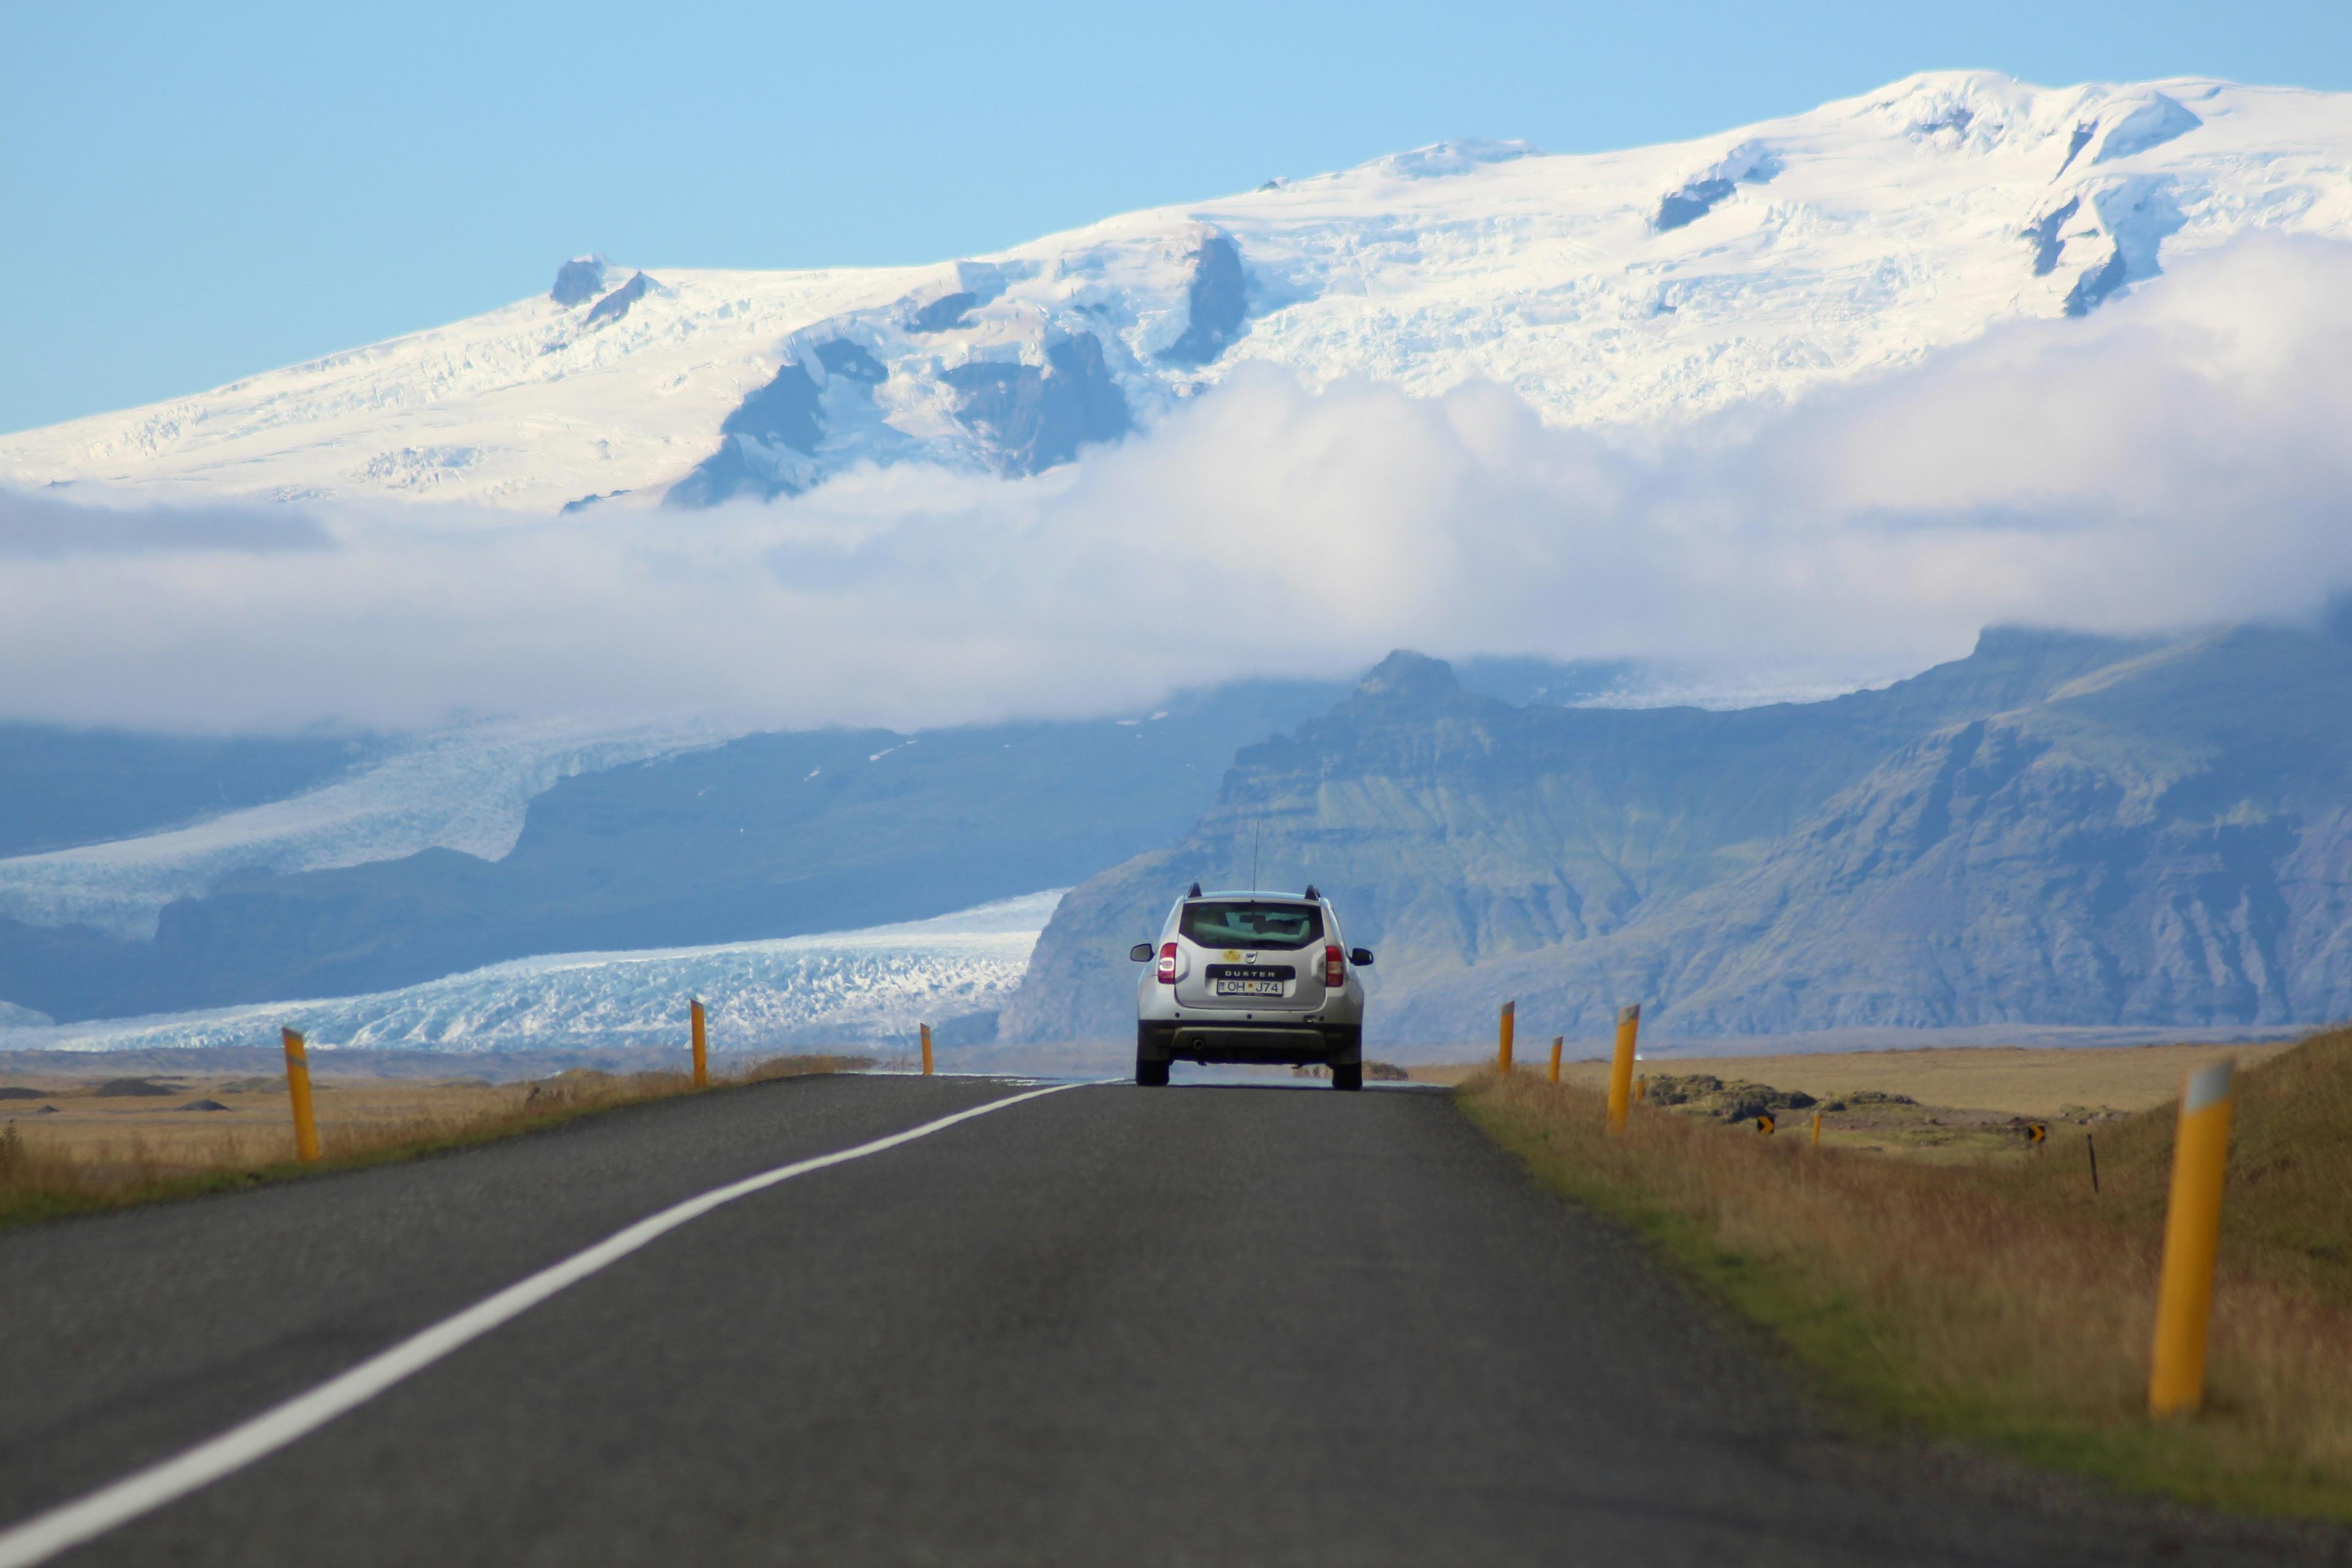 A car heading towards a glacier-capped mountain